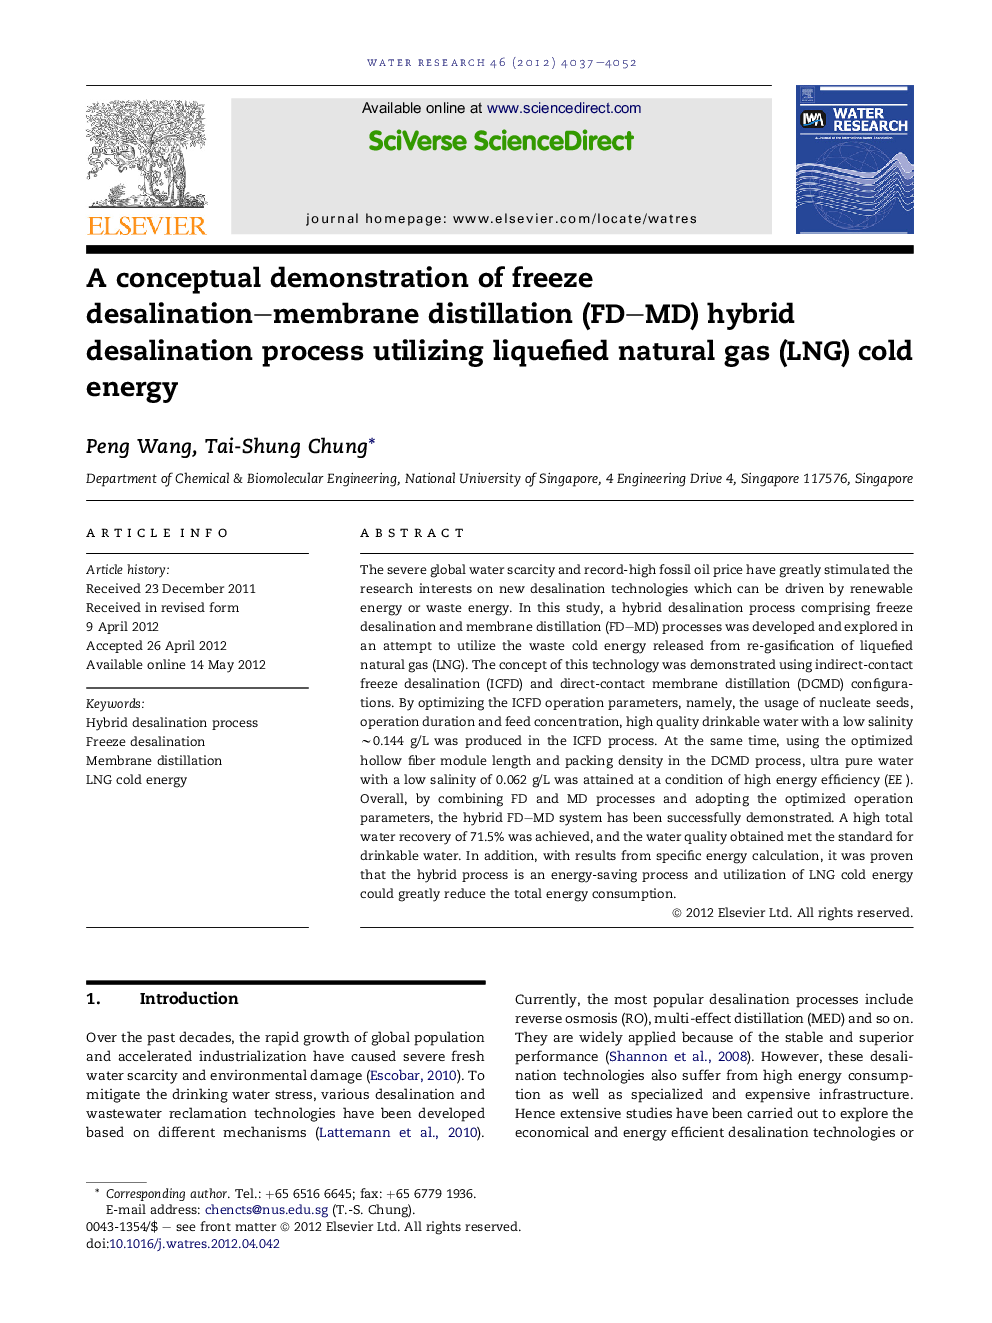 A conceptual demonstration of freeze desalination–membrane distillation (FD–MD) hybrid desalination process utilizing liquefied natural gas (LNG) cold energy